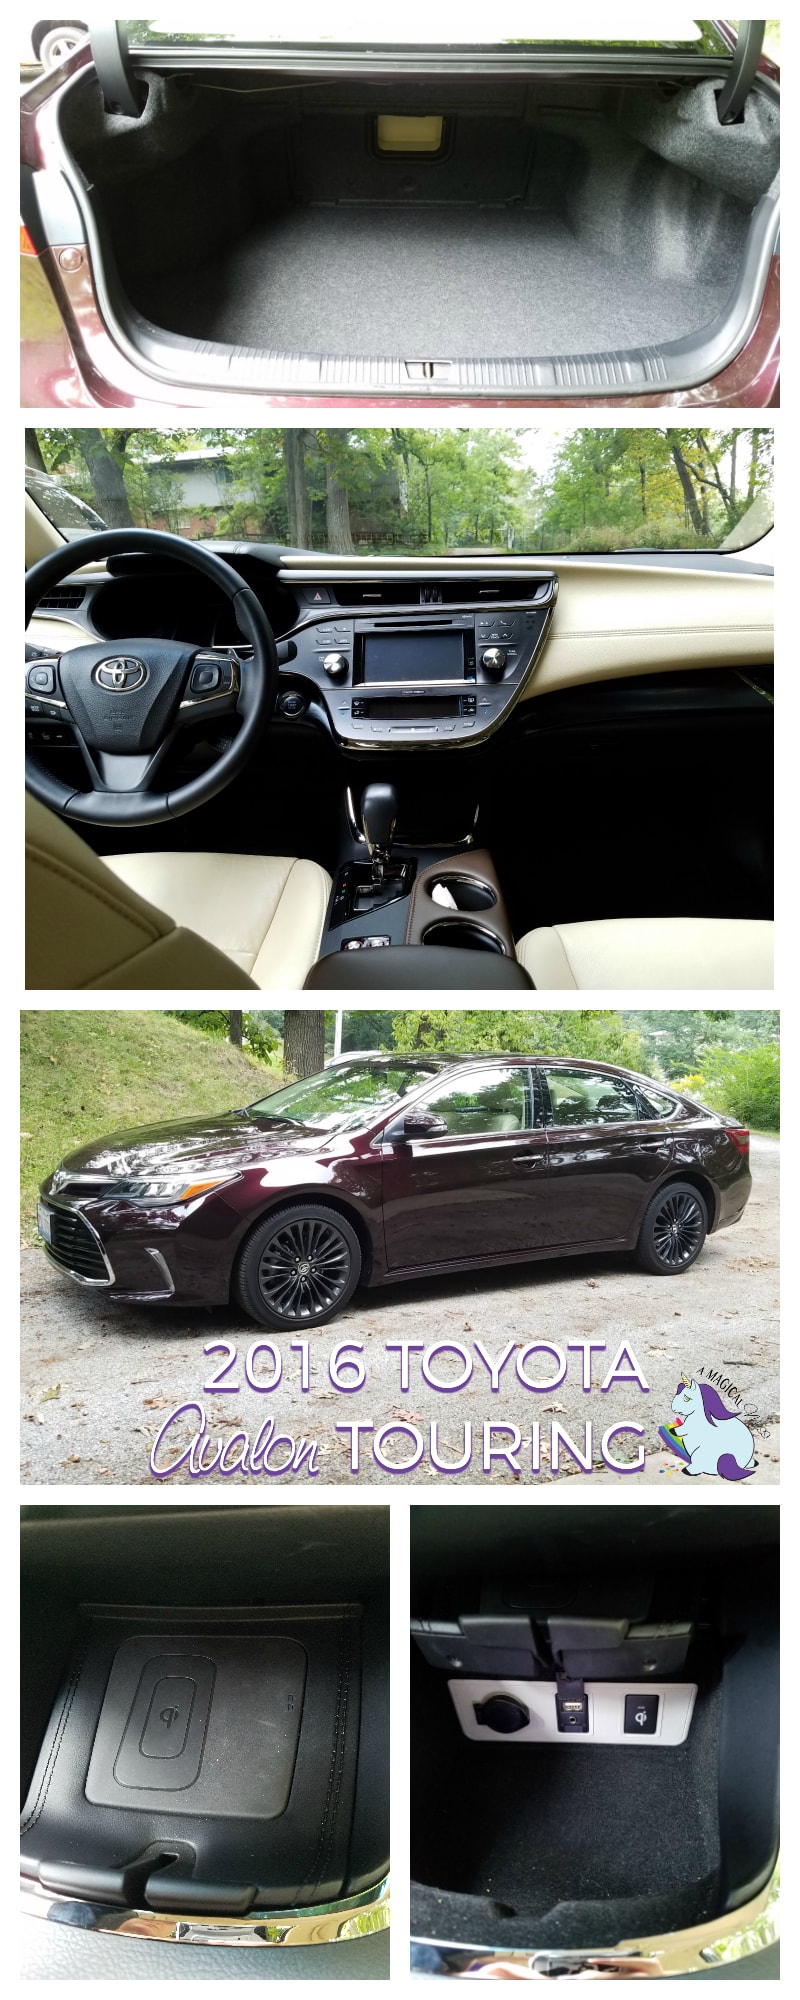 2016 Toyota Avalon Touring Review